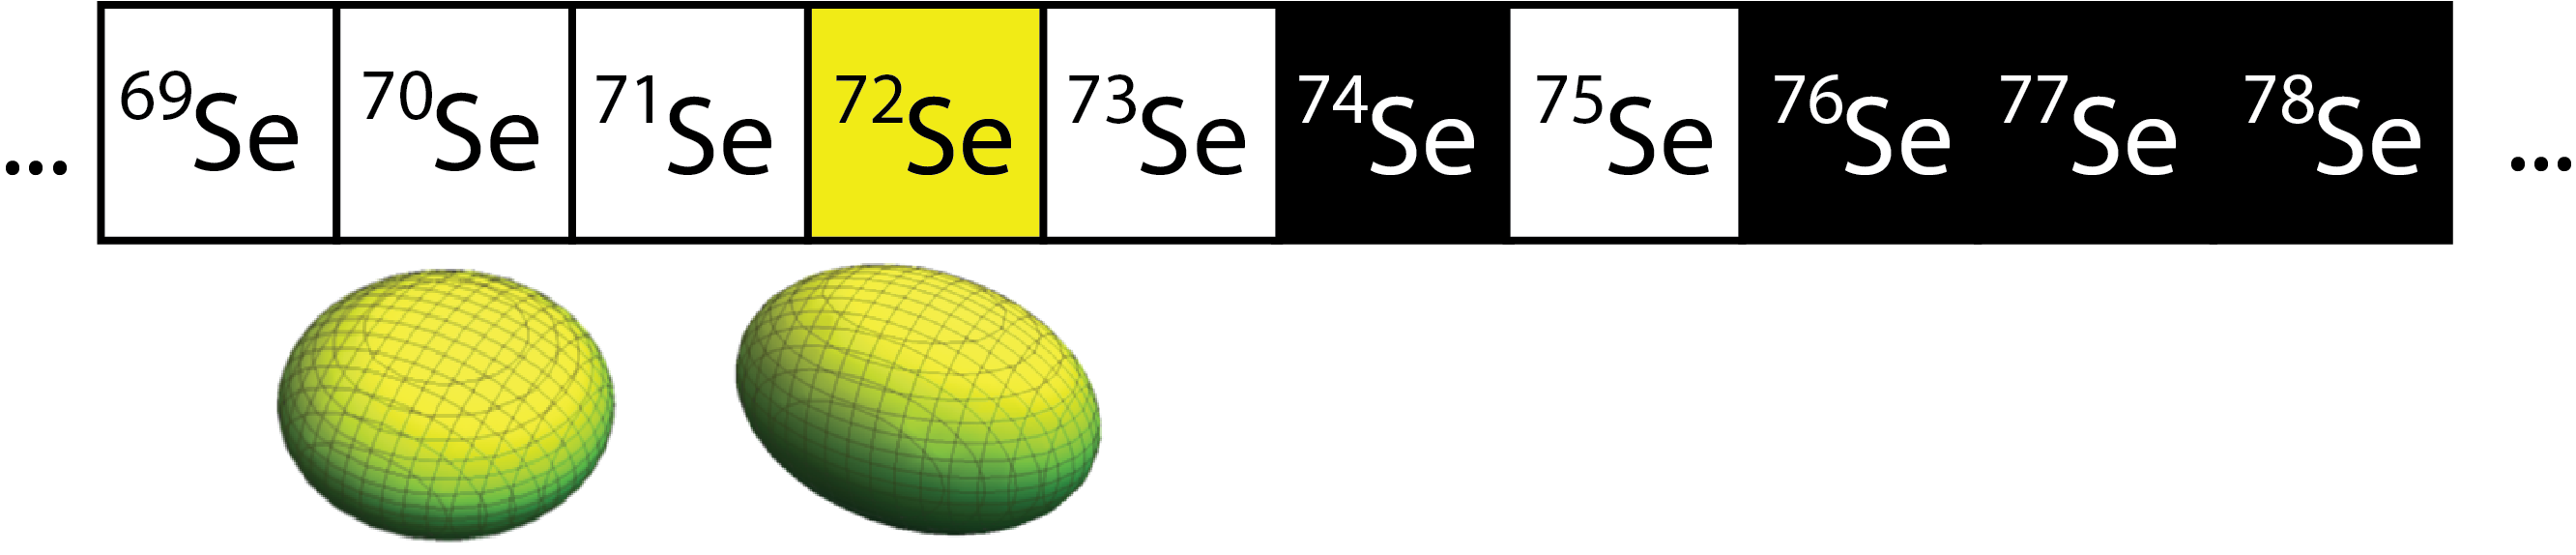 selenium isotopes